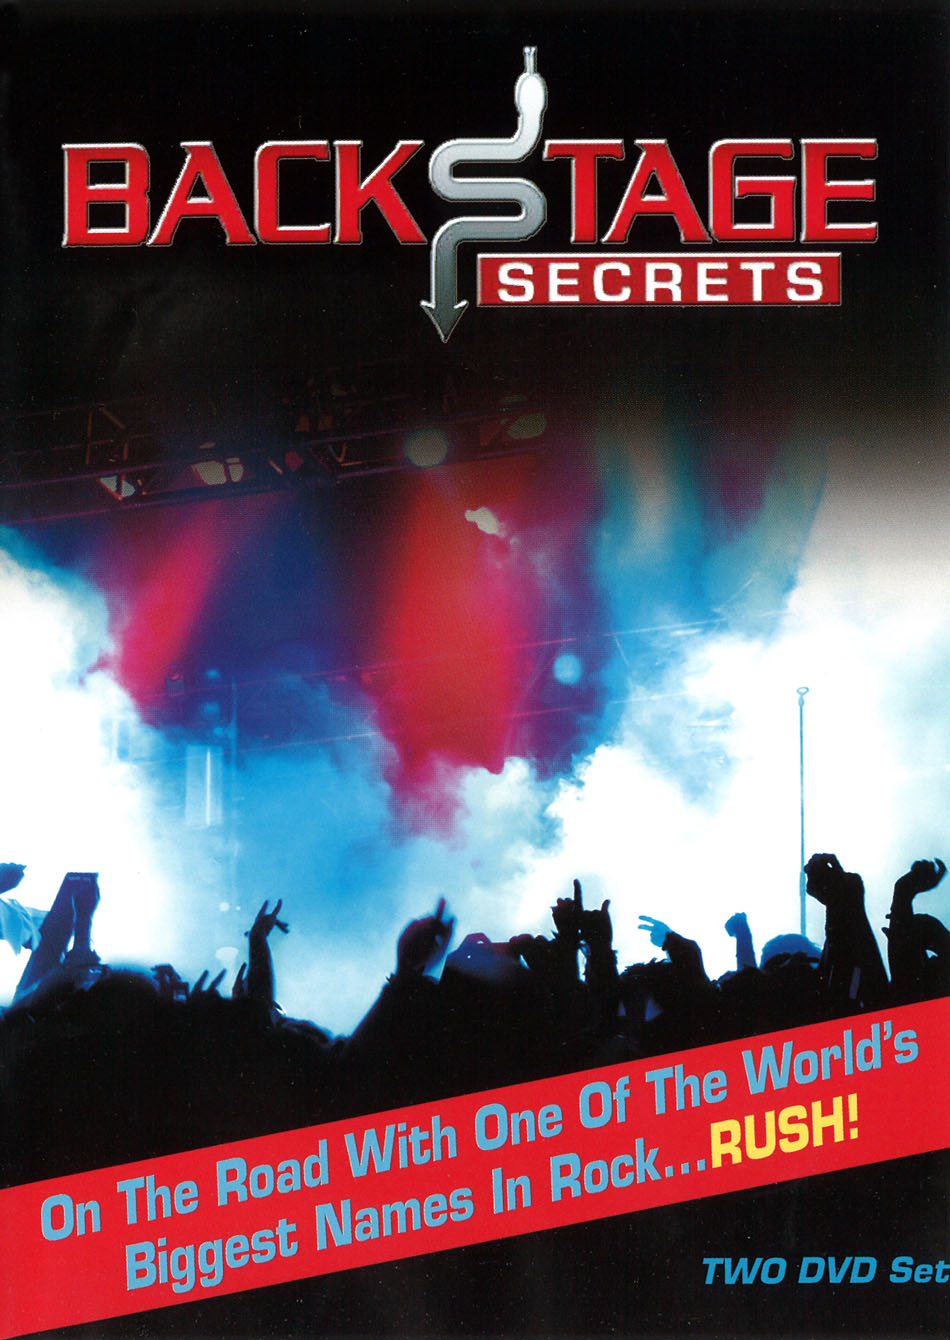 Rush: Backstage Secrets